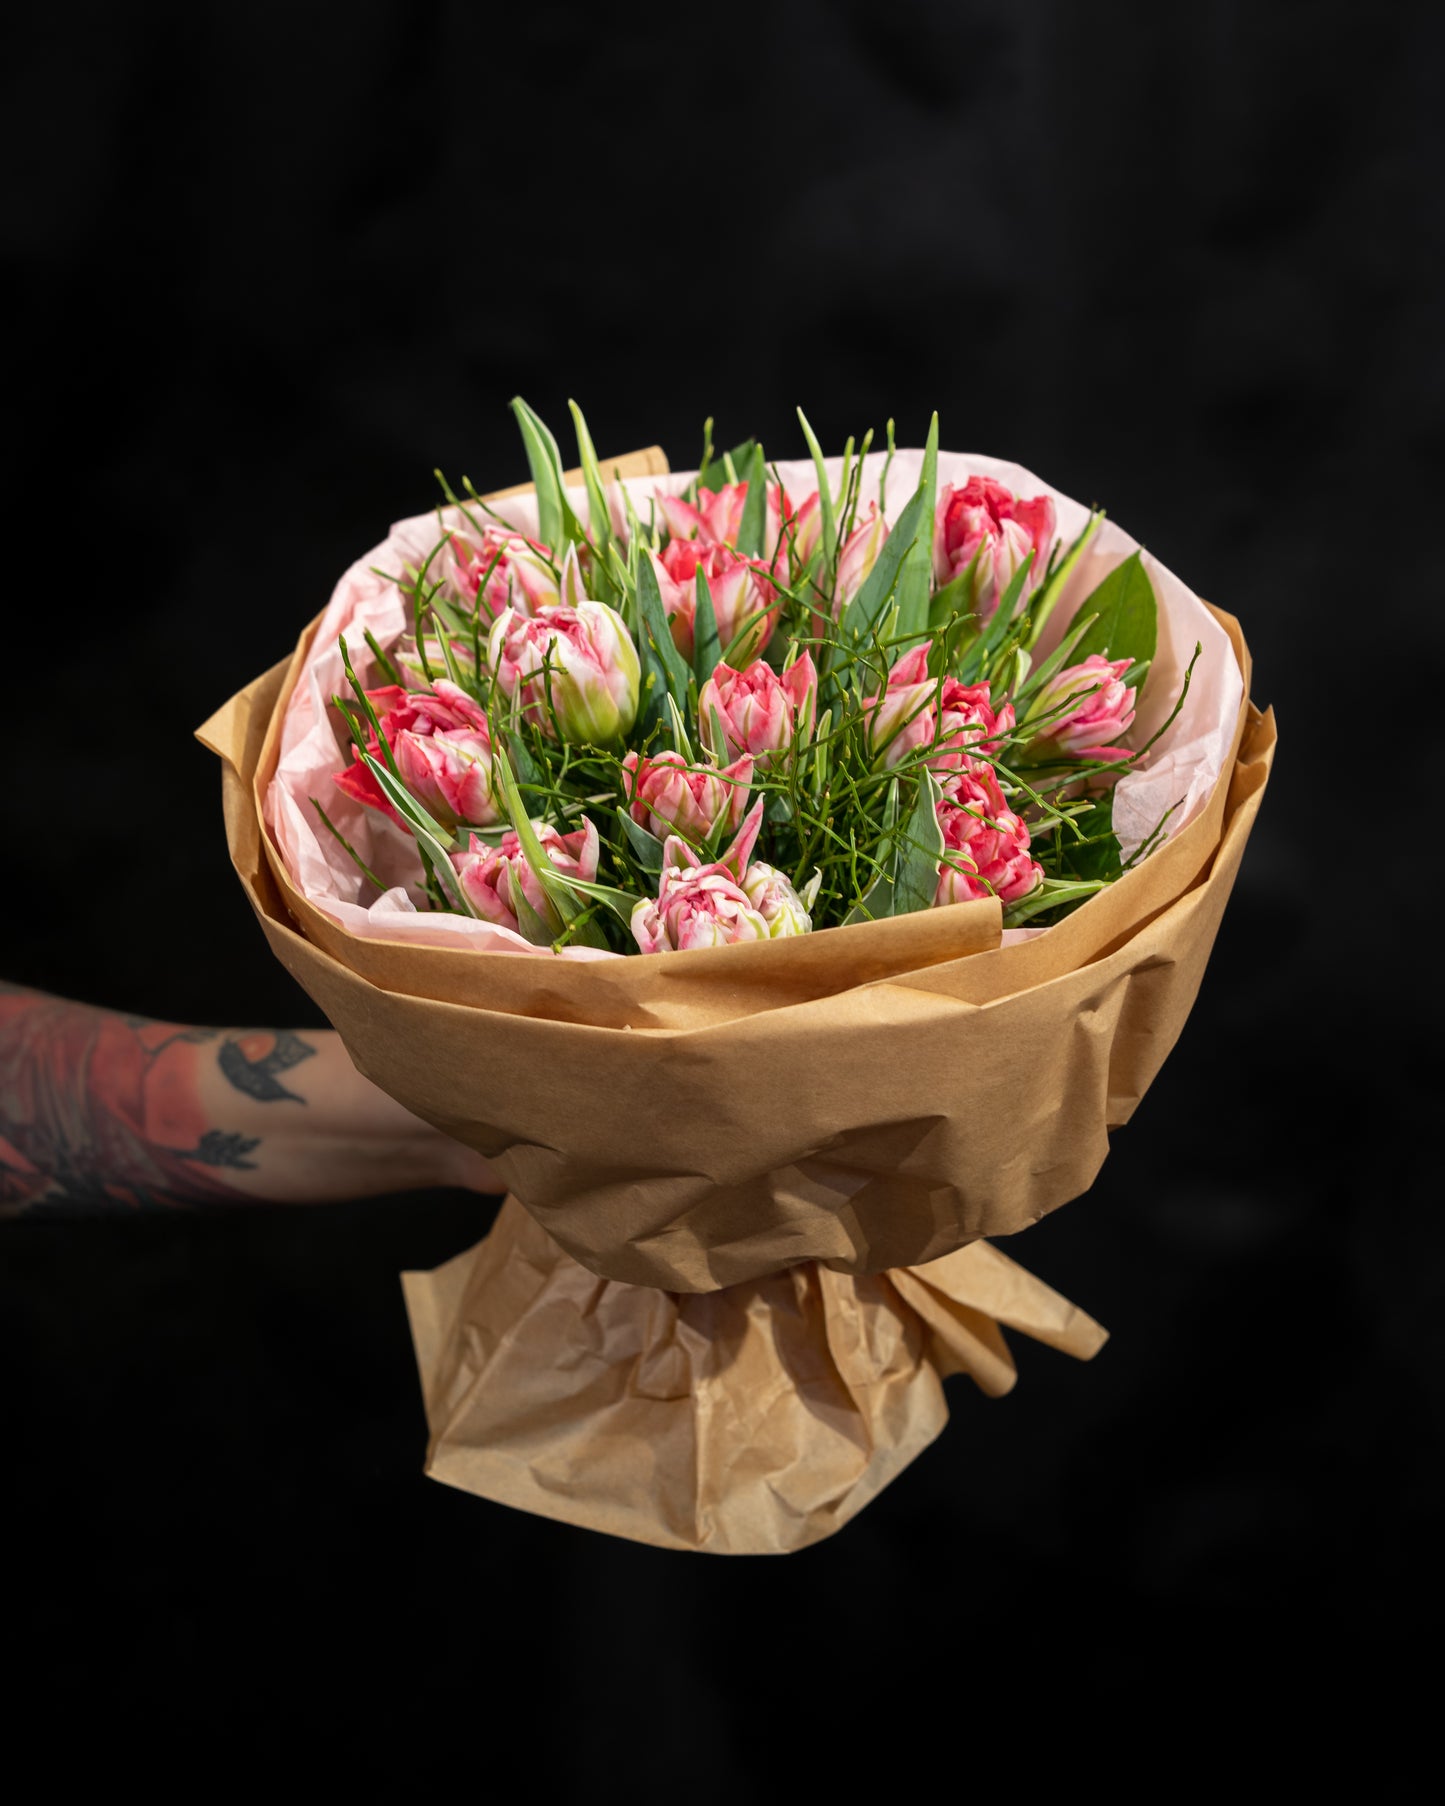 Luxurious Tulips, pink